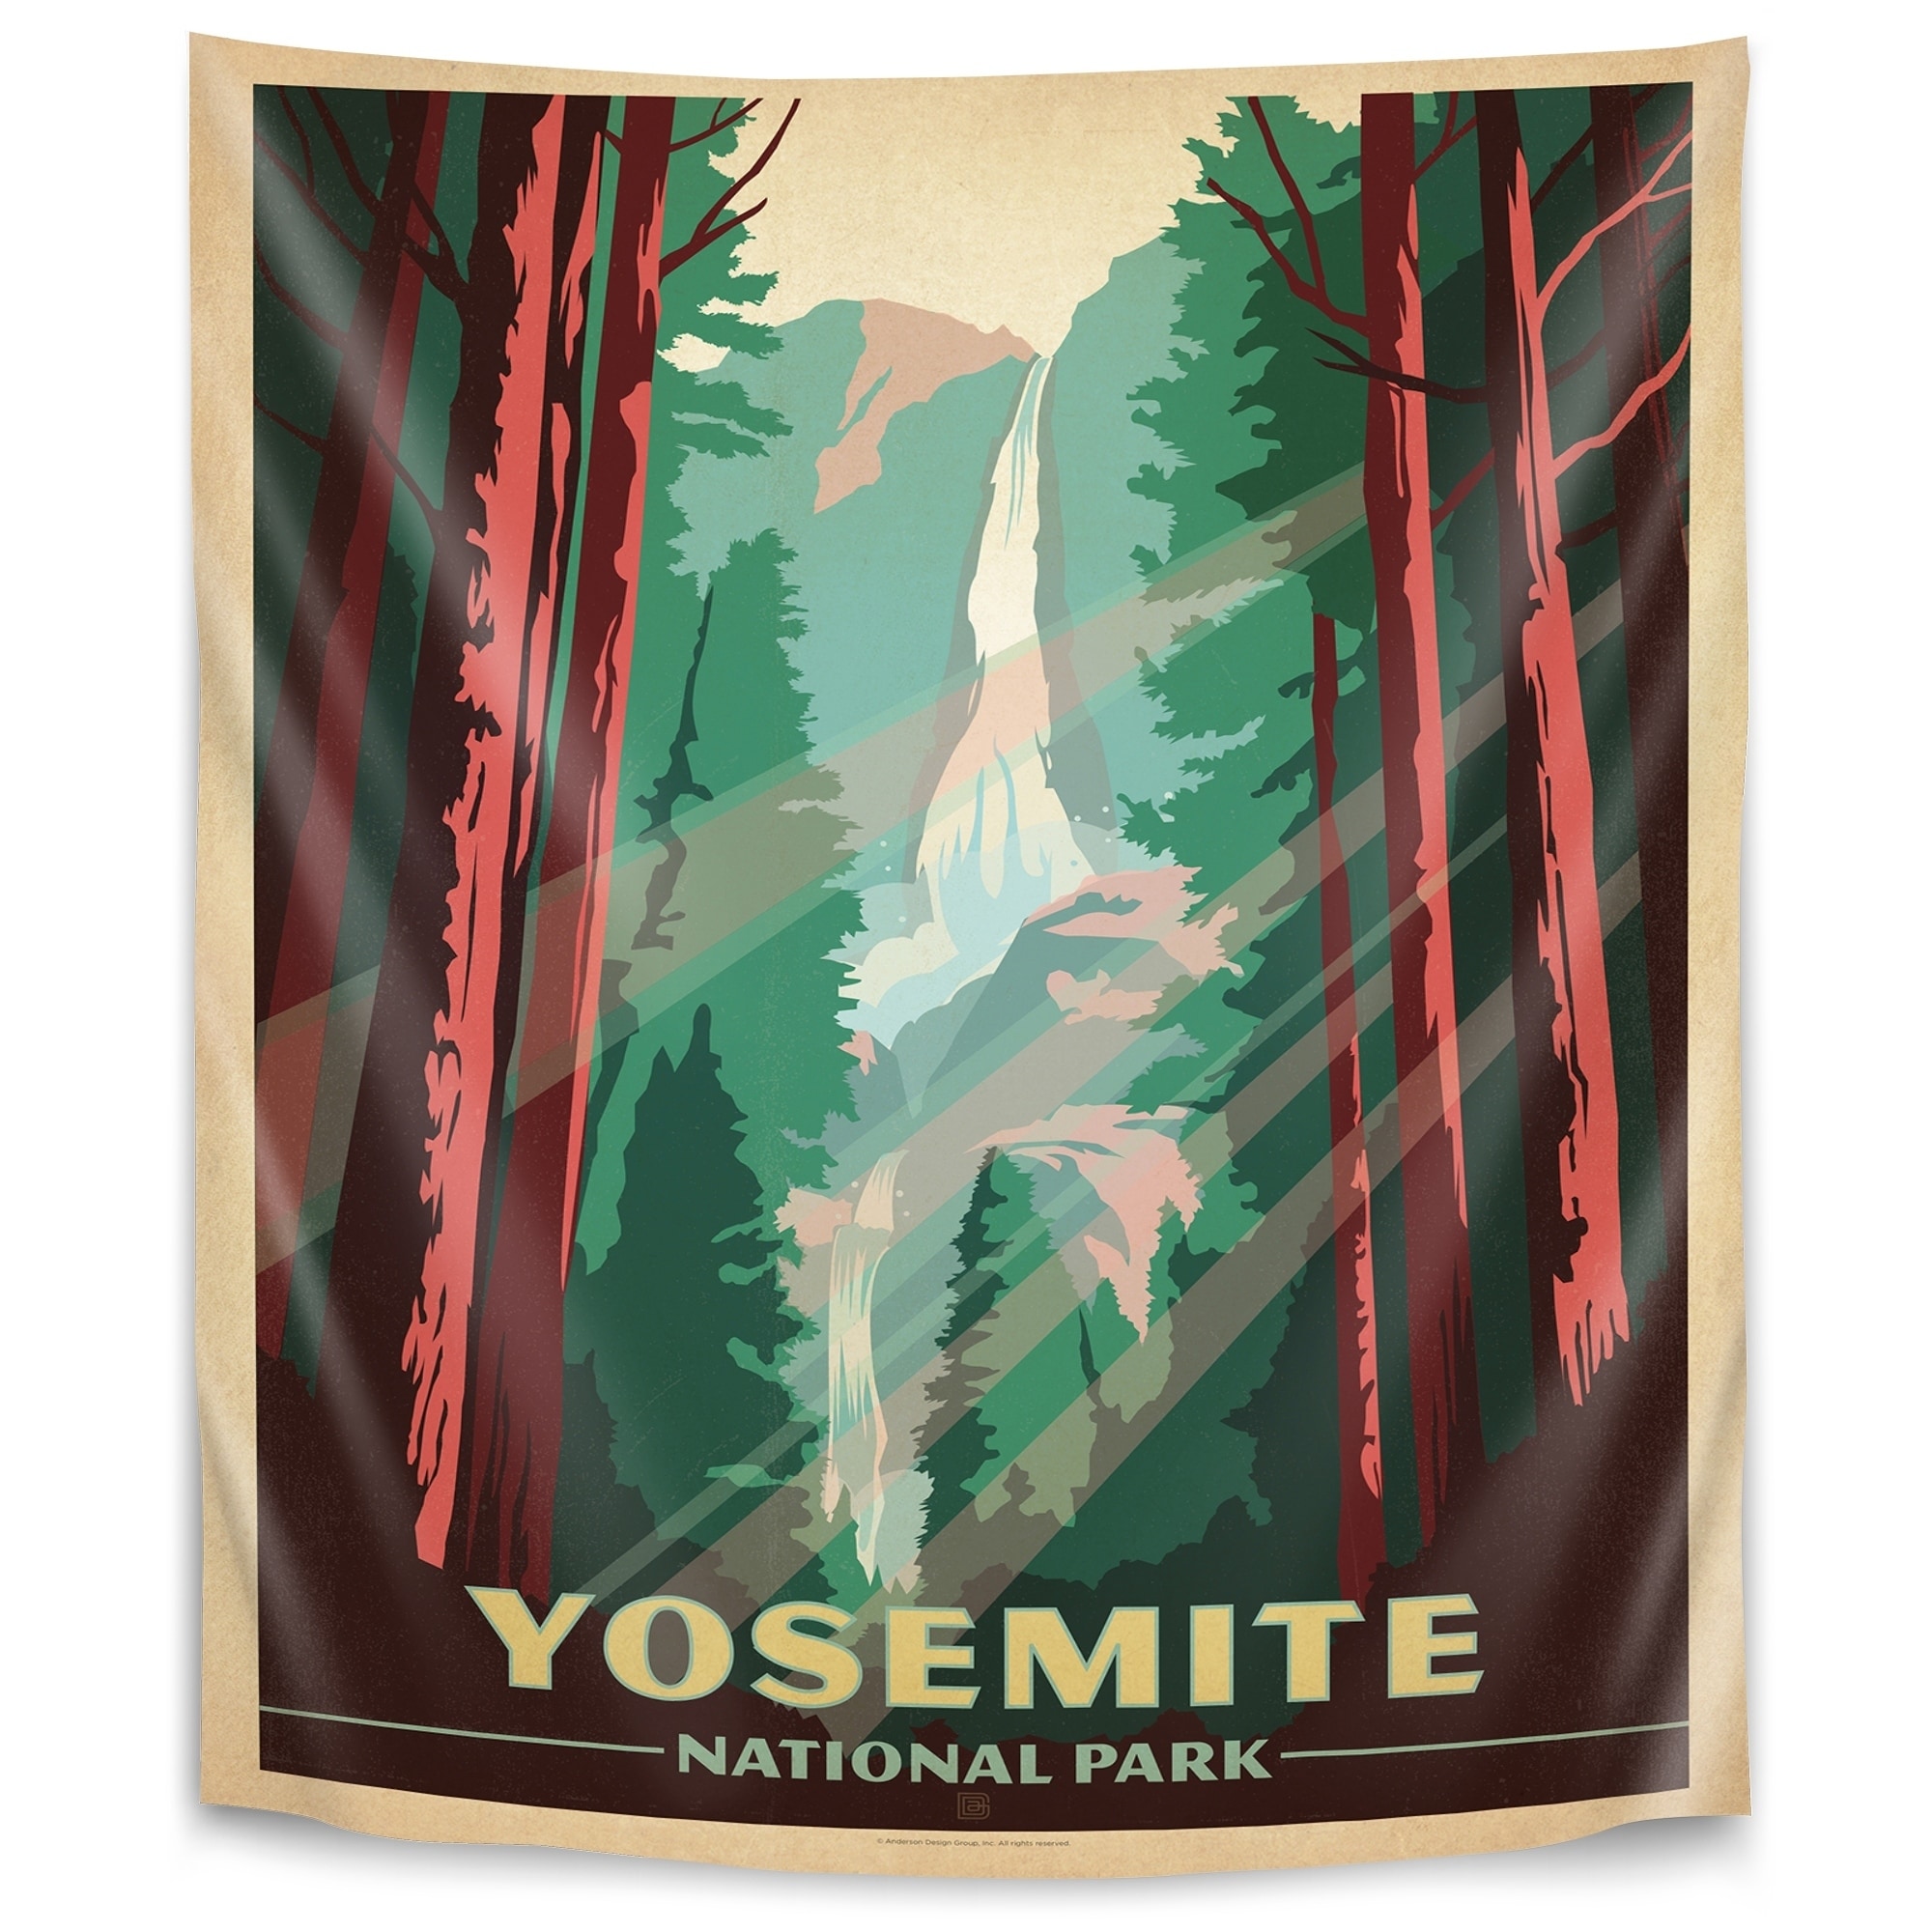 18x18 Throw Pillow: Emblem of Yosemite National Park - Anderson Design  Group